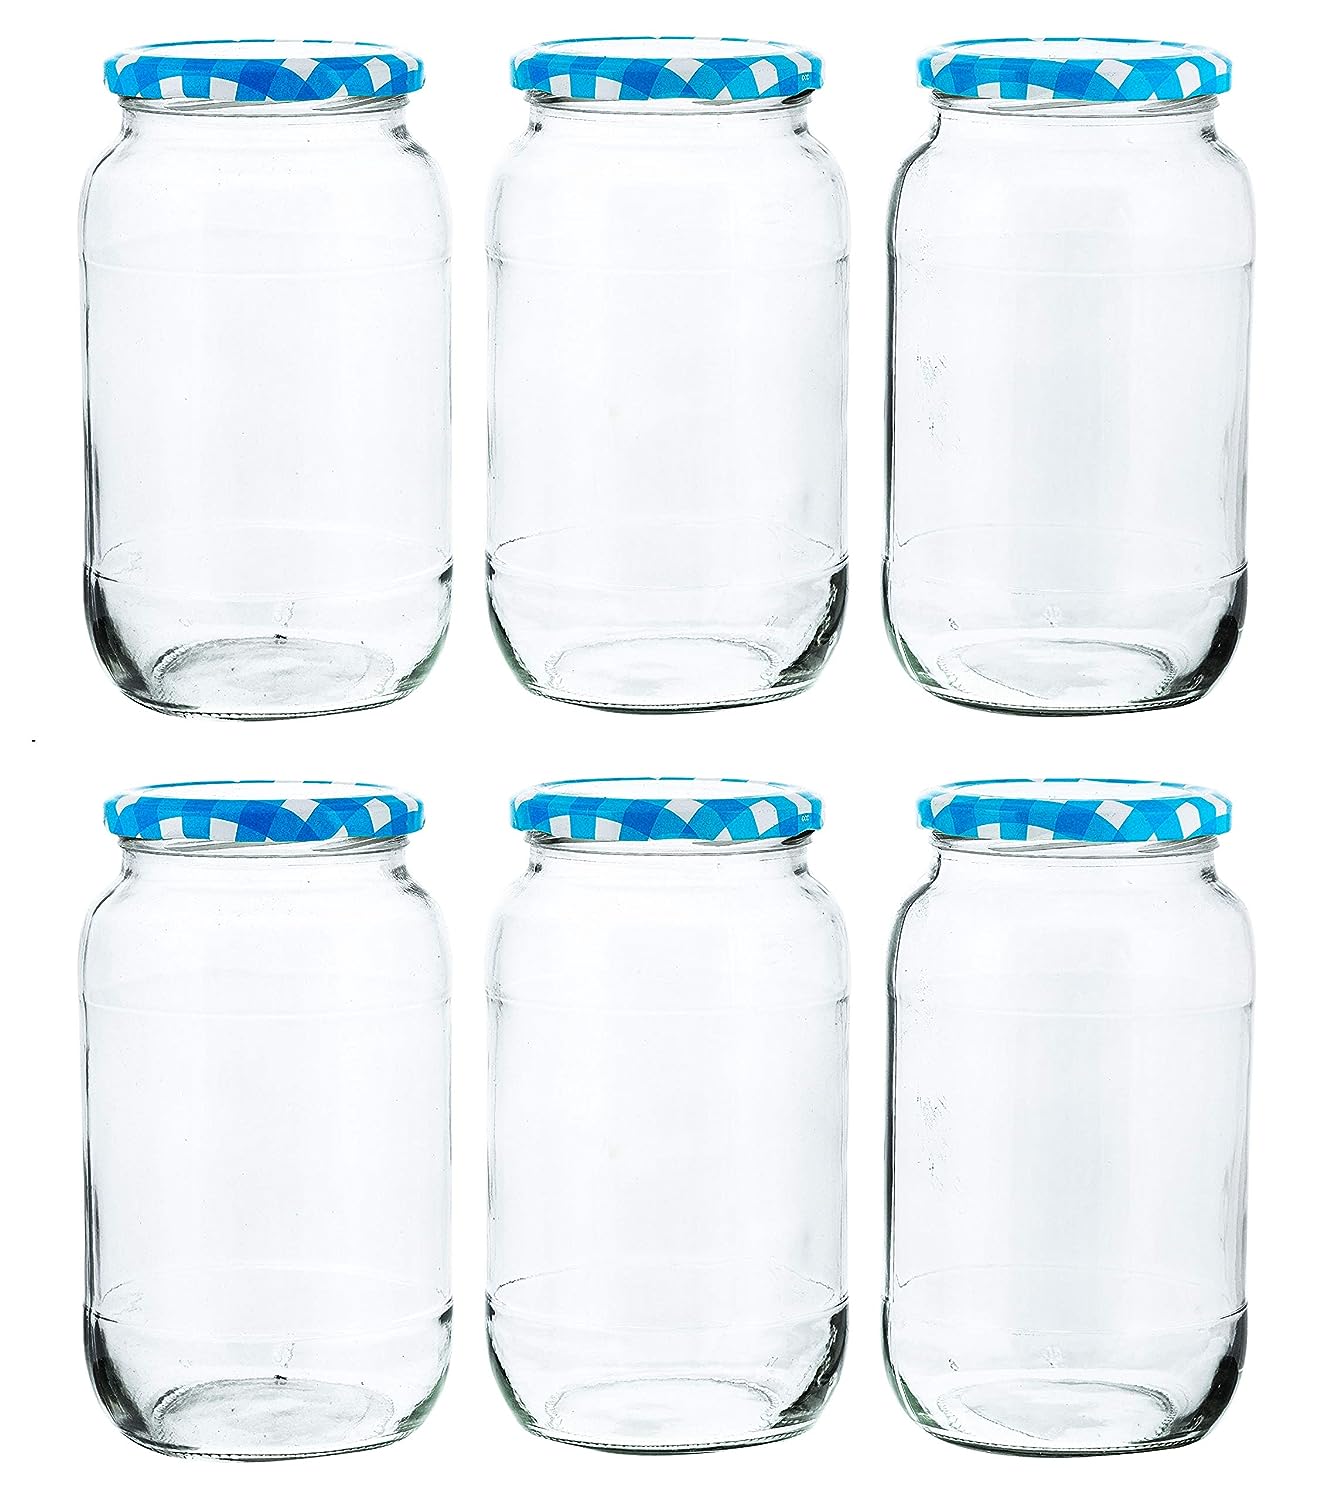 Machak Big Glass Jars Storage Containers for Kitchen 1kg, Blue Check Lids (6 Pieces)